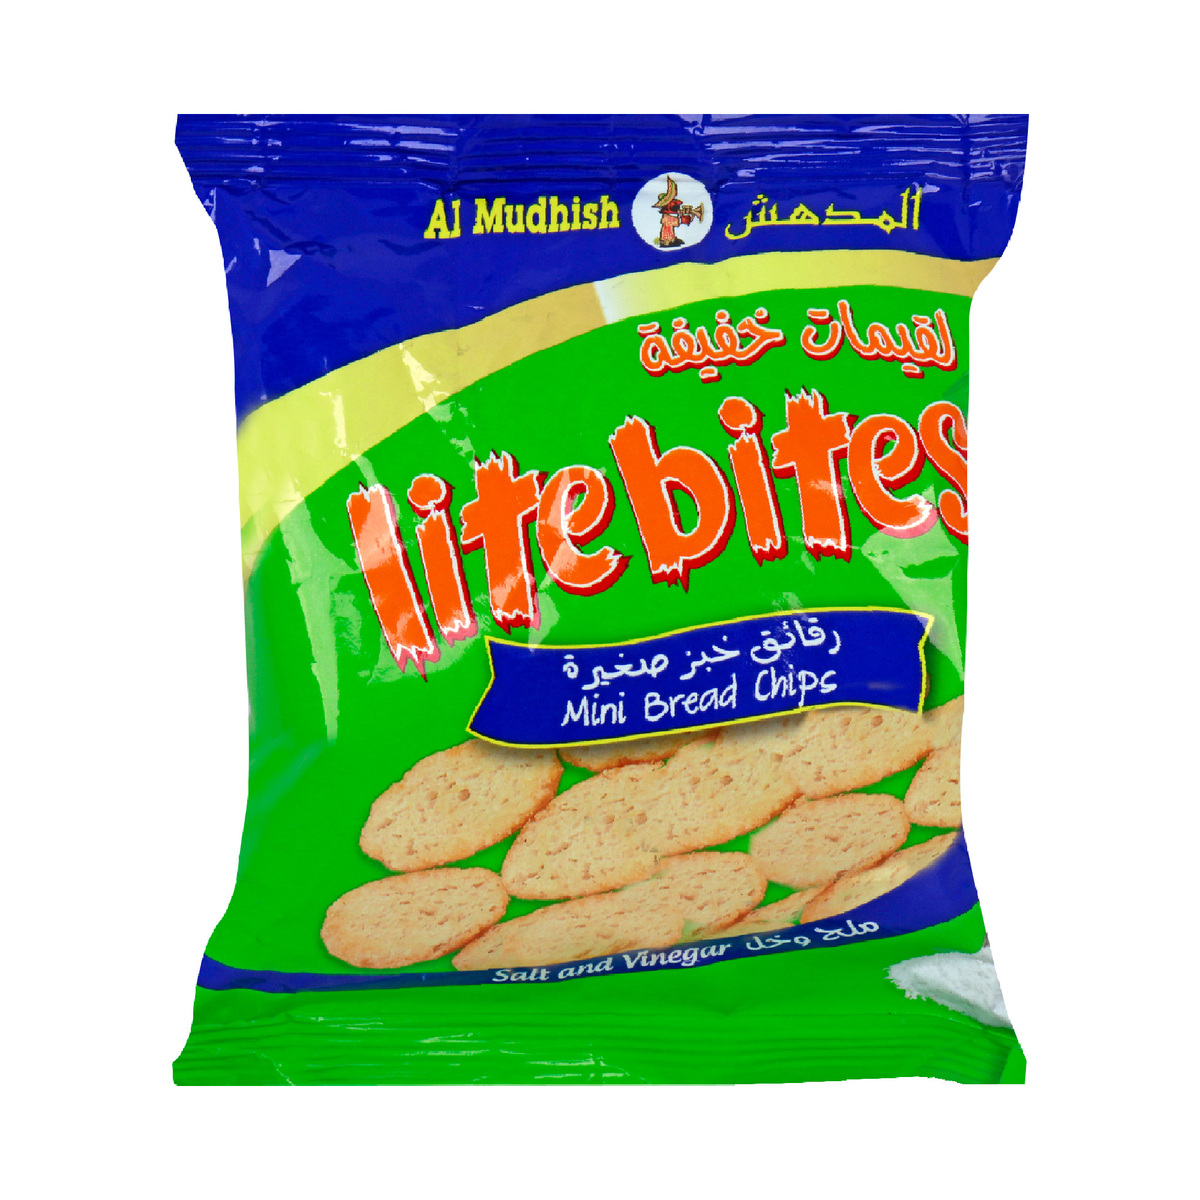 Al Mudhish Lite Bites Salt & Vinegar Mini Bread Chips 18 g